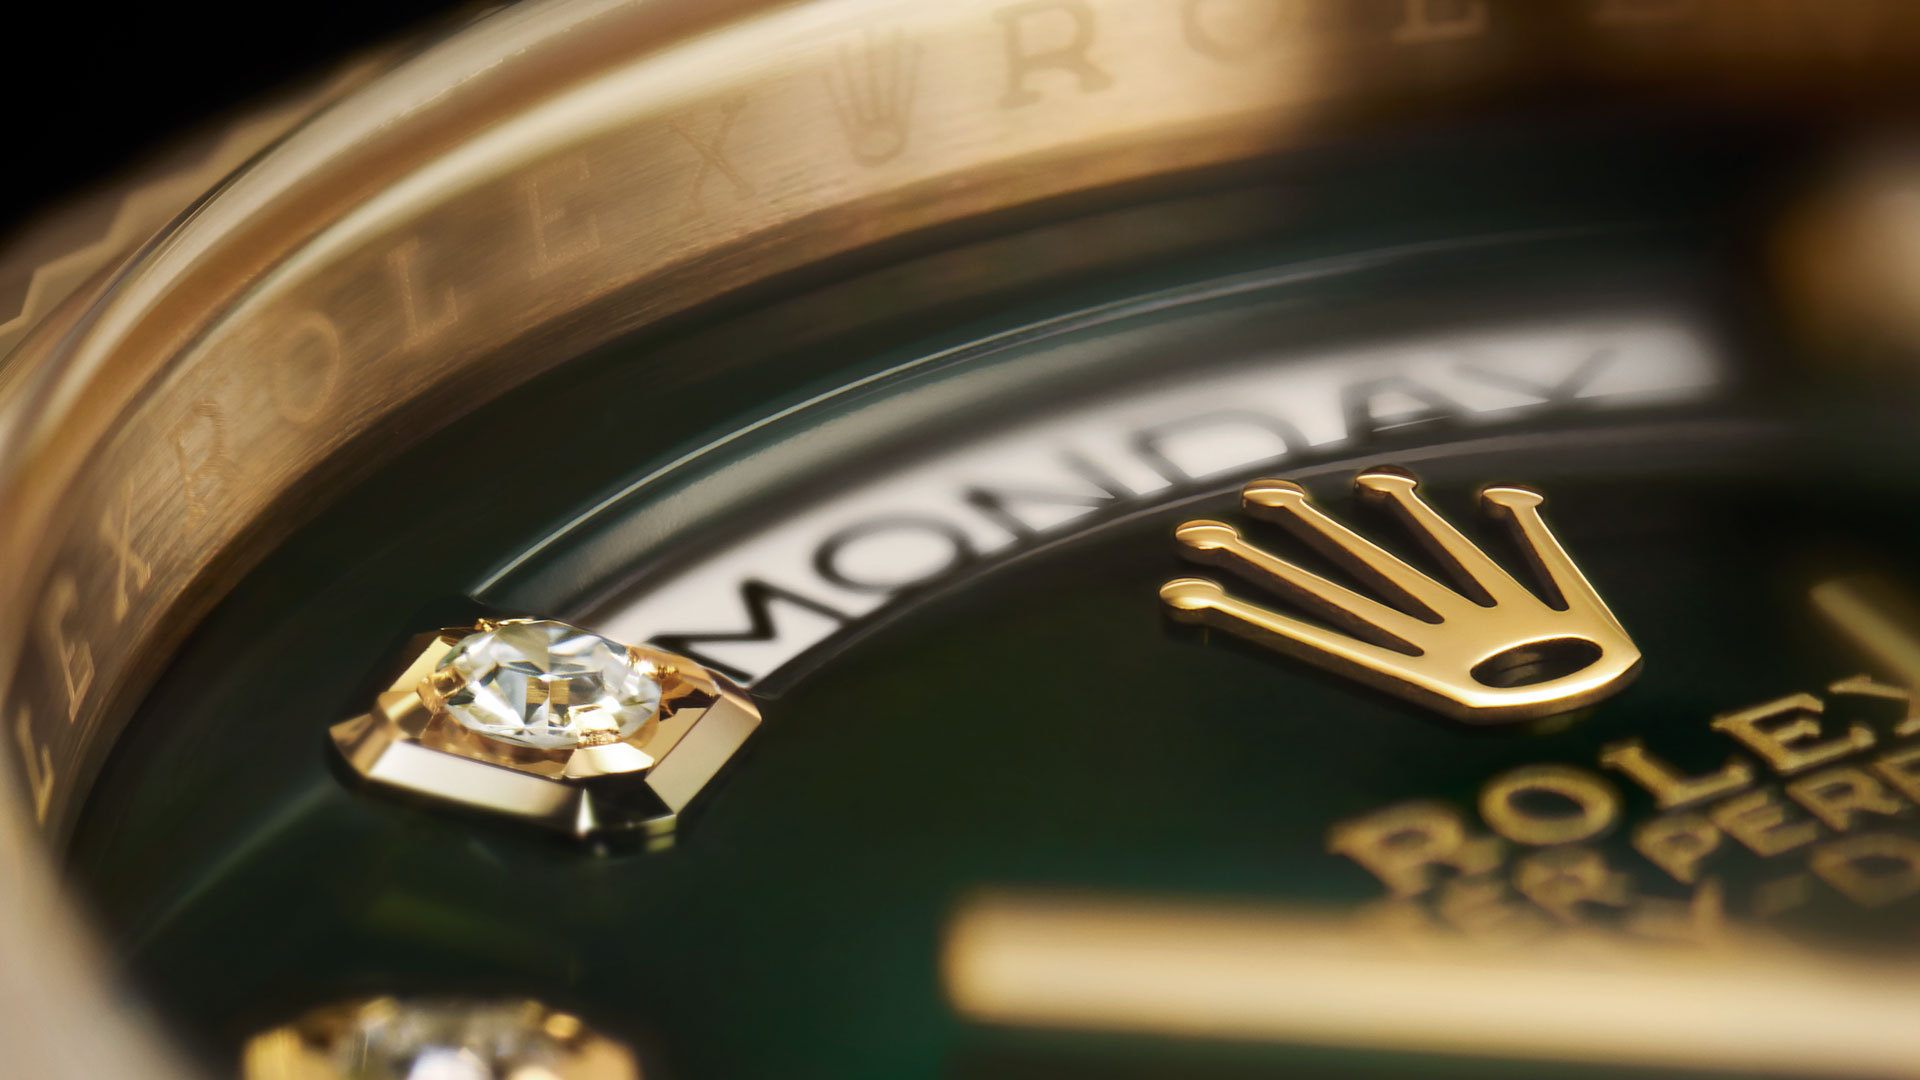 Rolex The watch of prestige